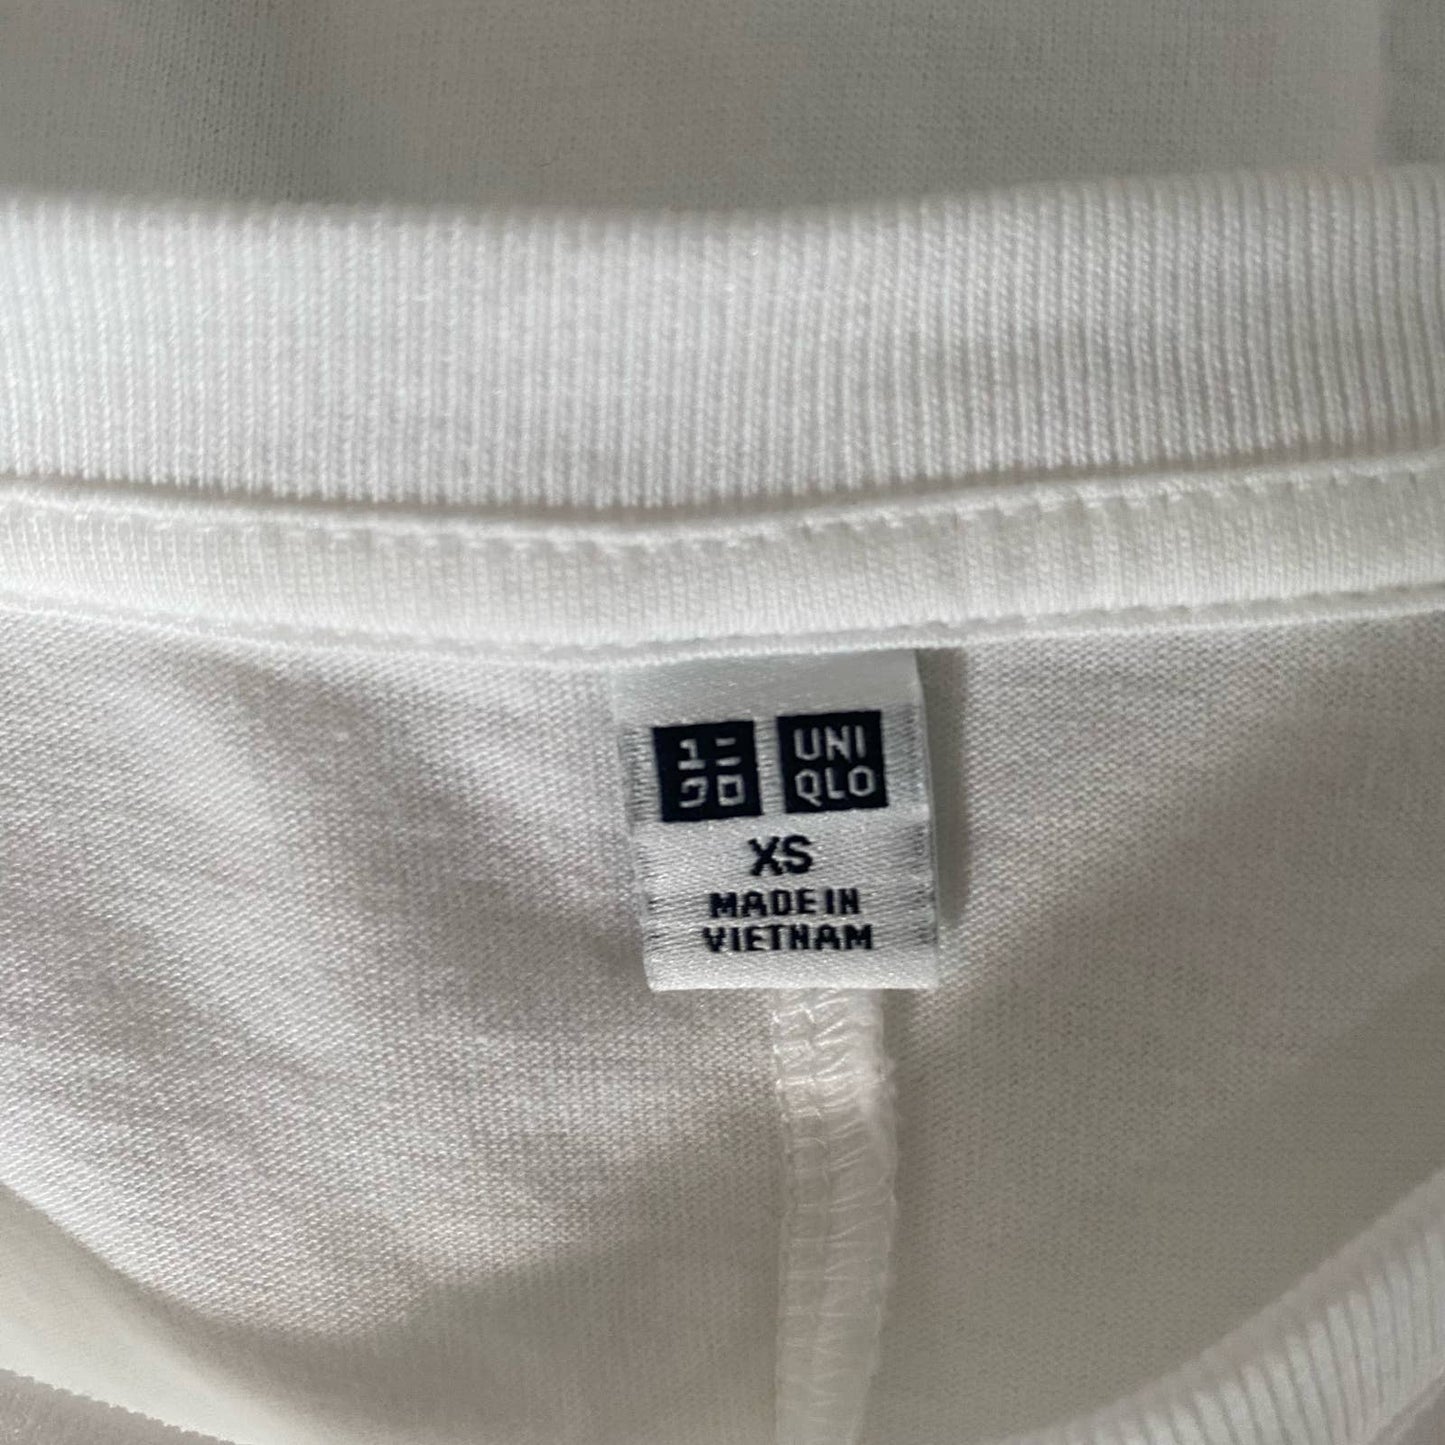 Uniqlo sz XS 3/4 sleeve batwing 100% cotton top shirt NWOT